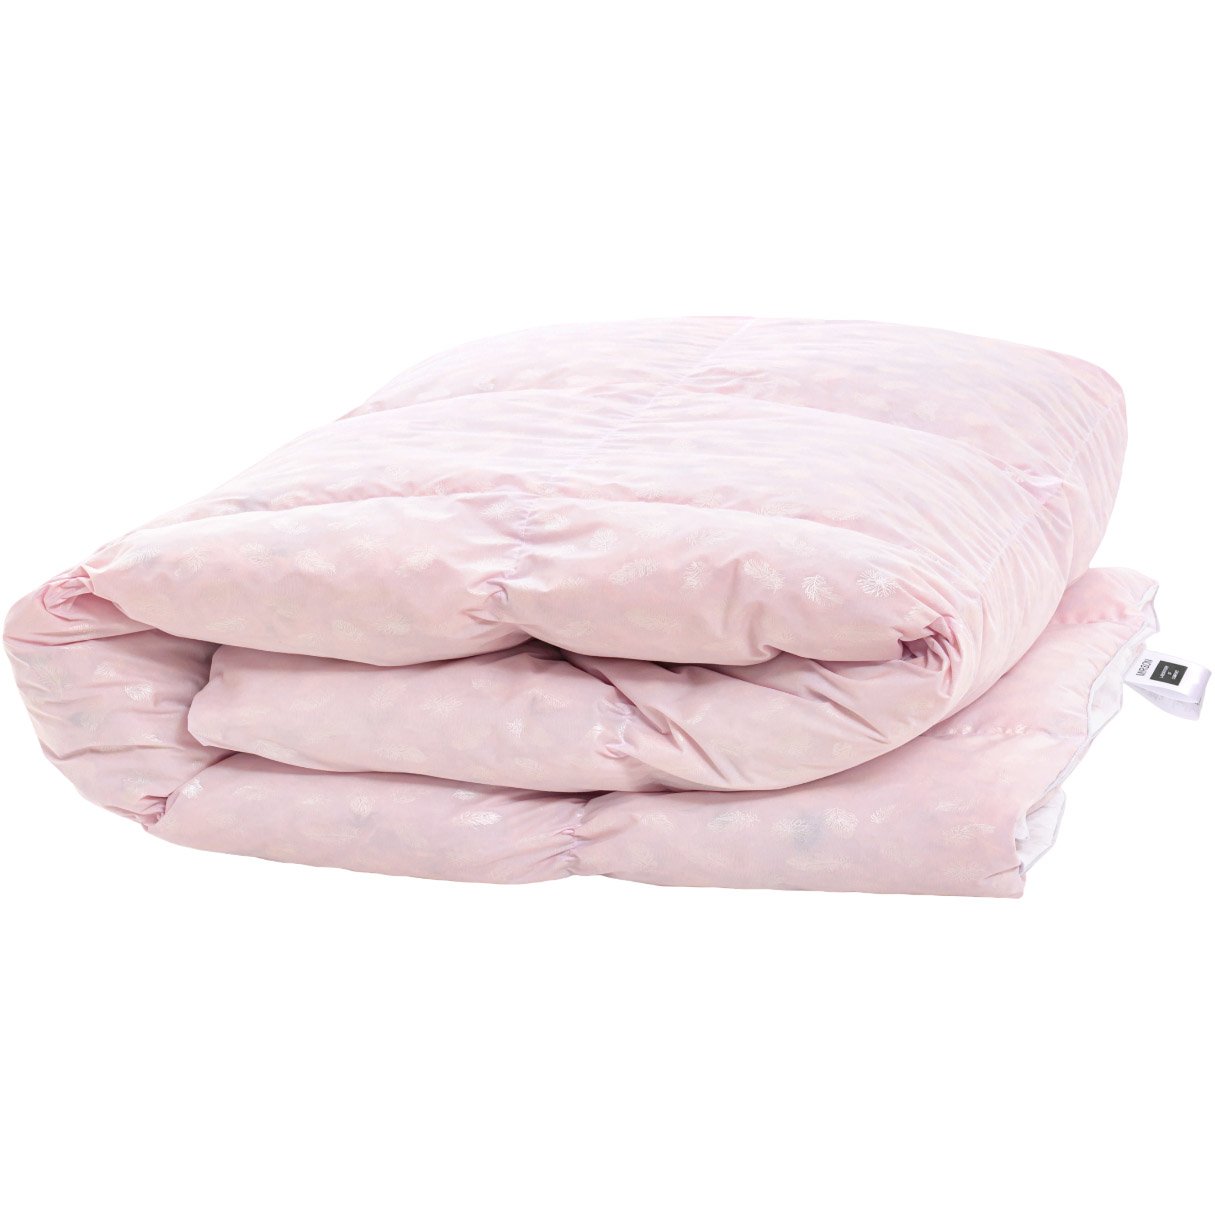 Одеяло пуховое MirSon Karmen №1850 Bio-Pink, 70% пух, евростандарт, 220x200, розовое (2200003014471) - фото 1